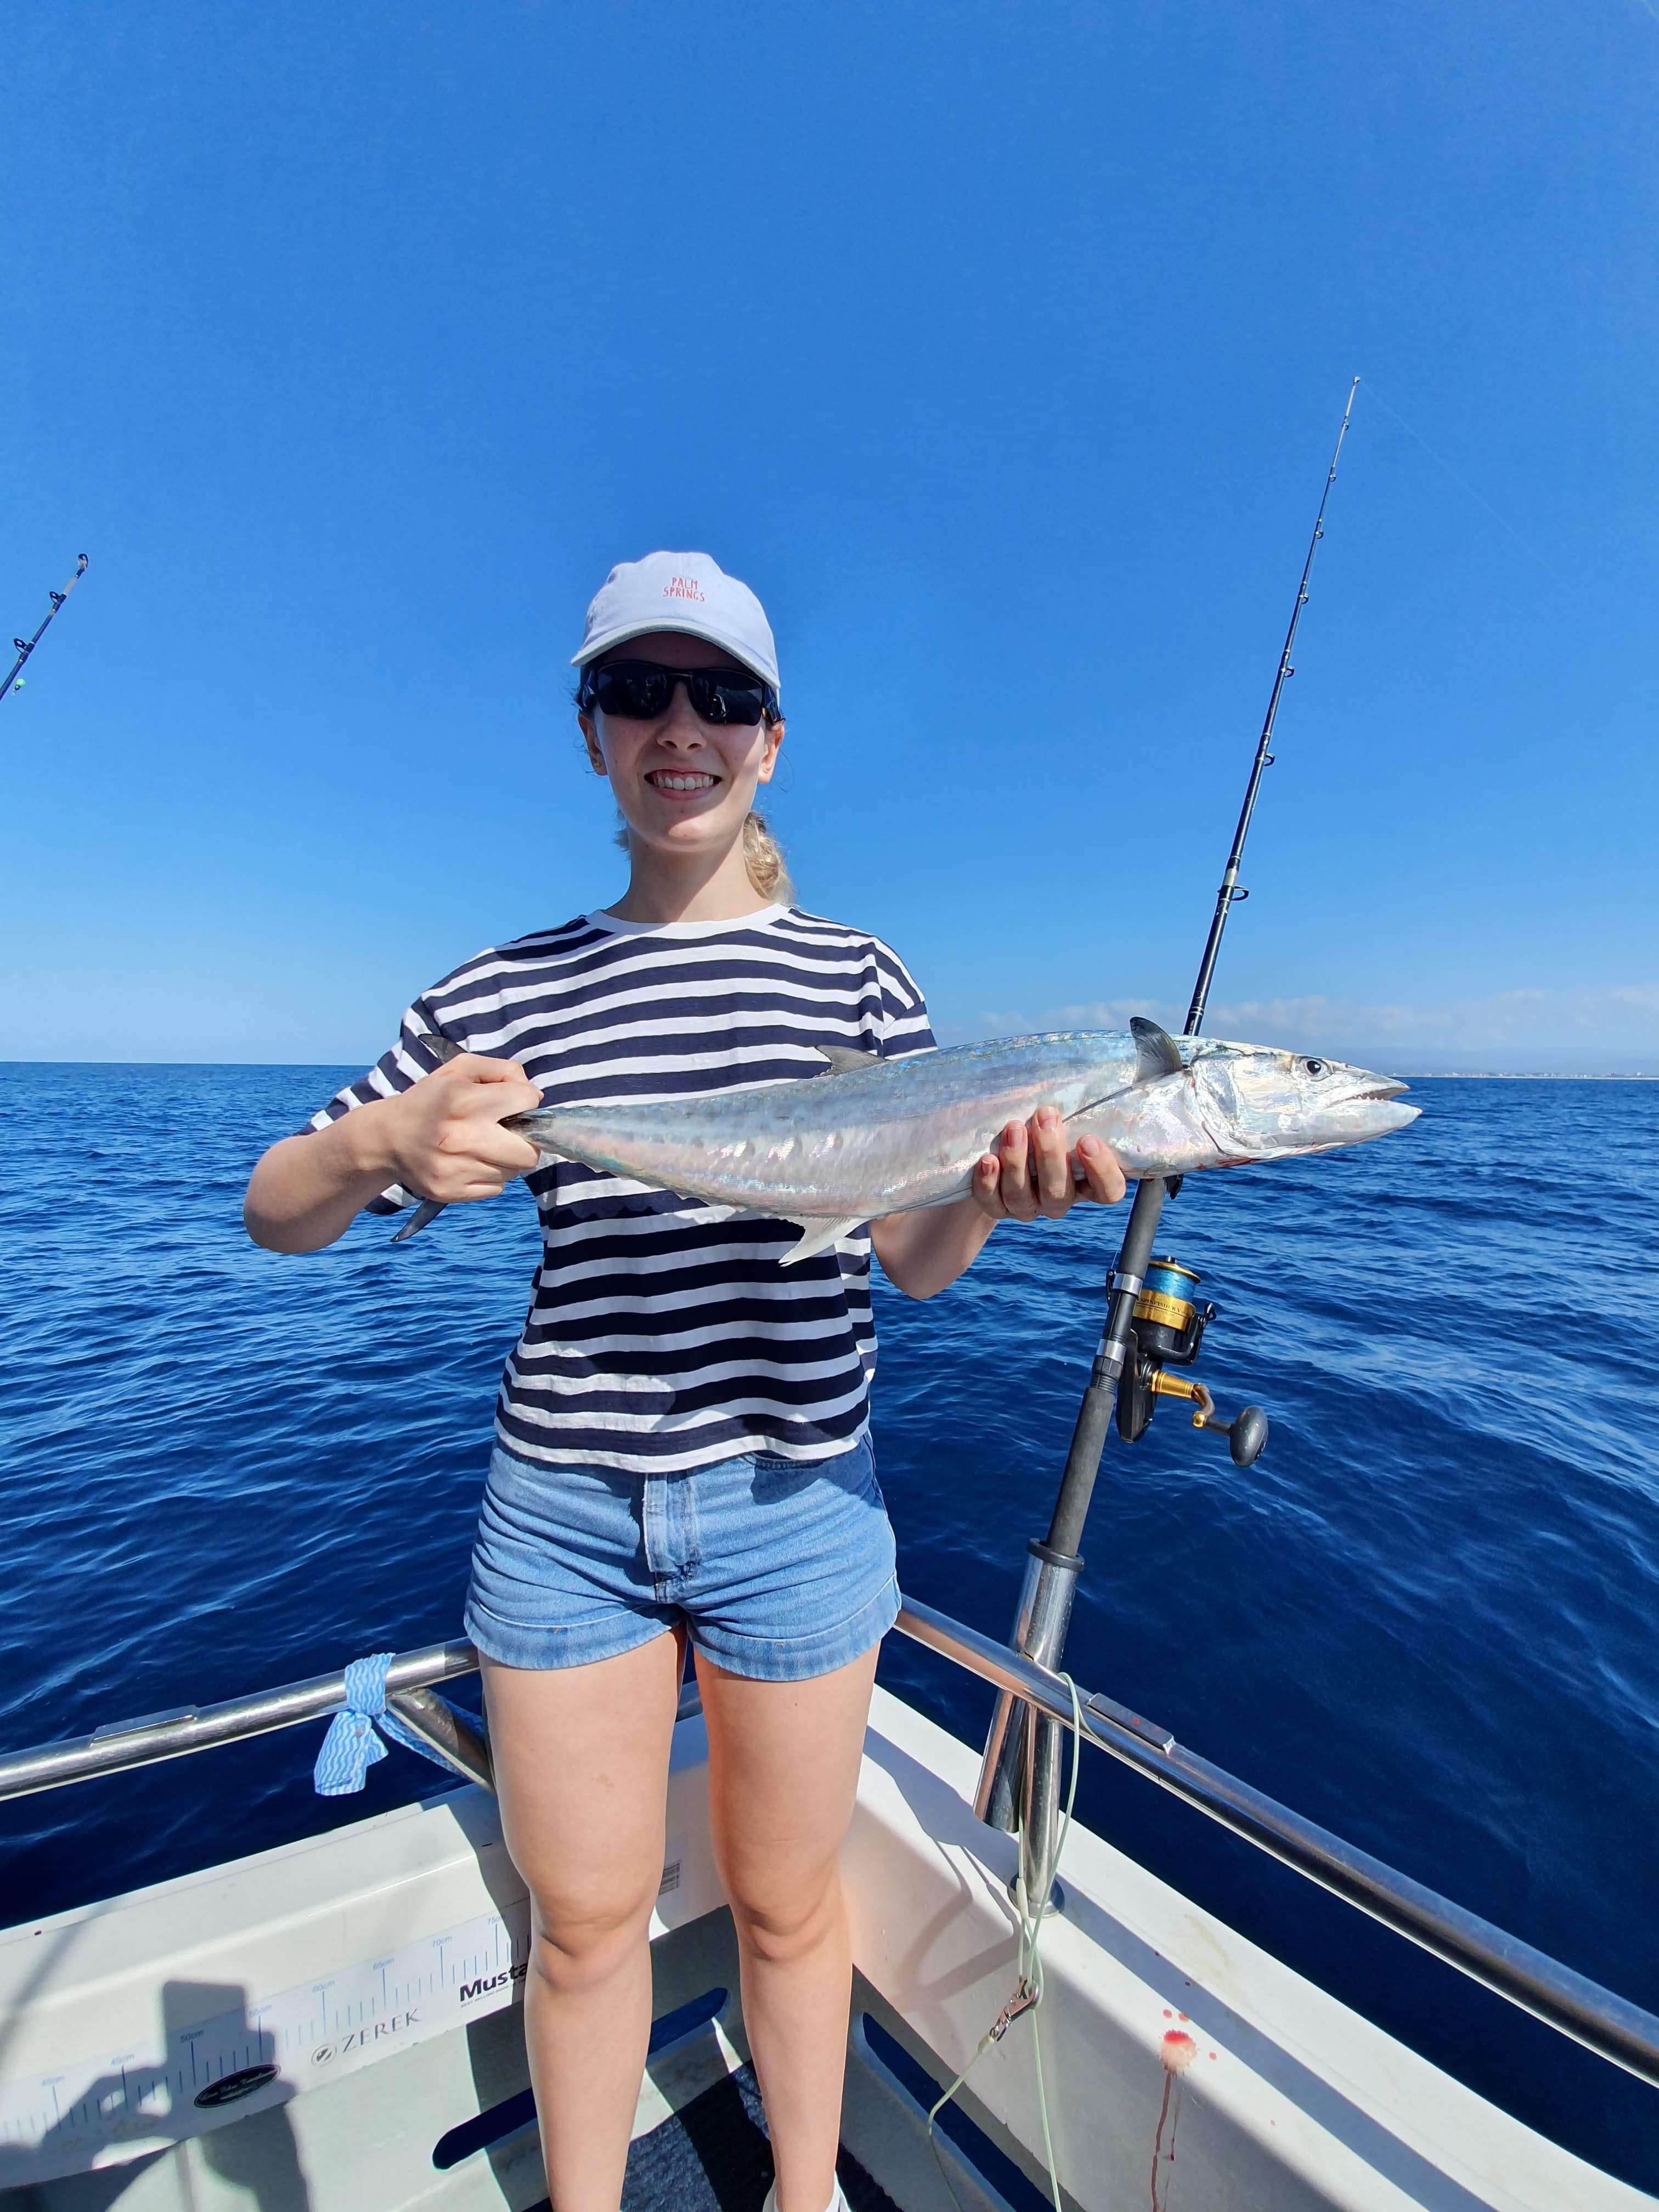 Catch mackerel - How to guide